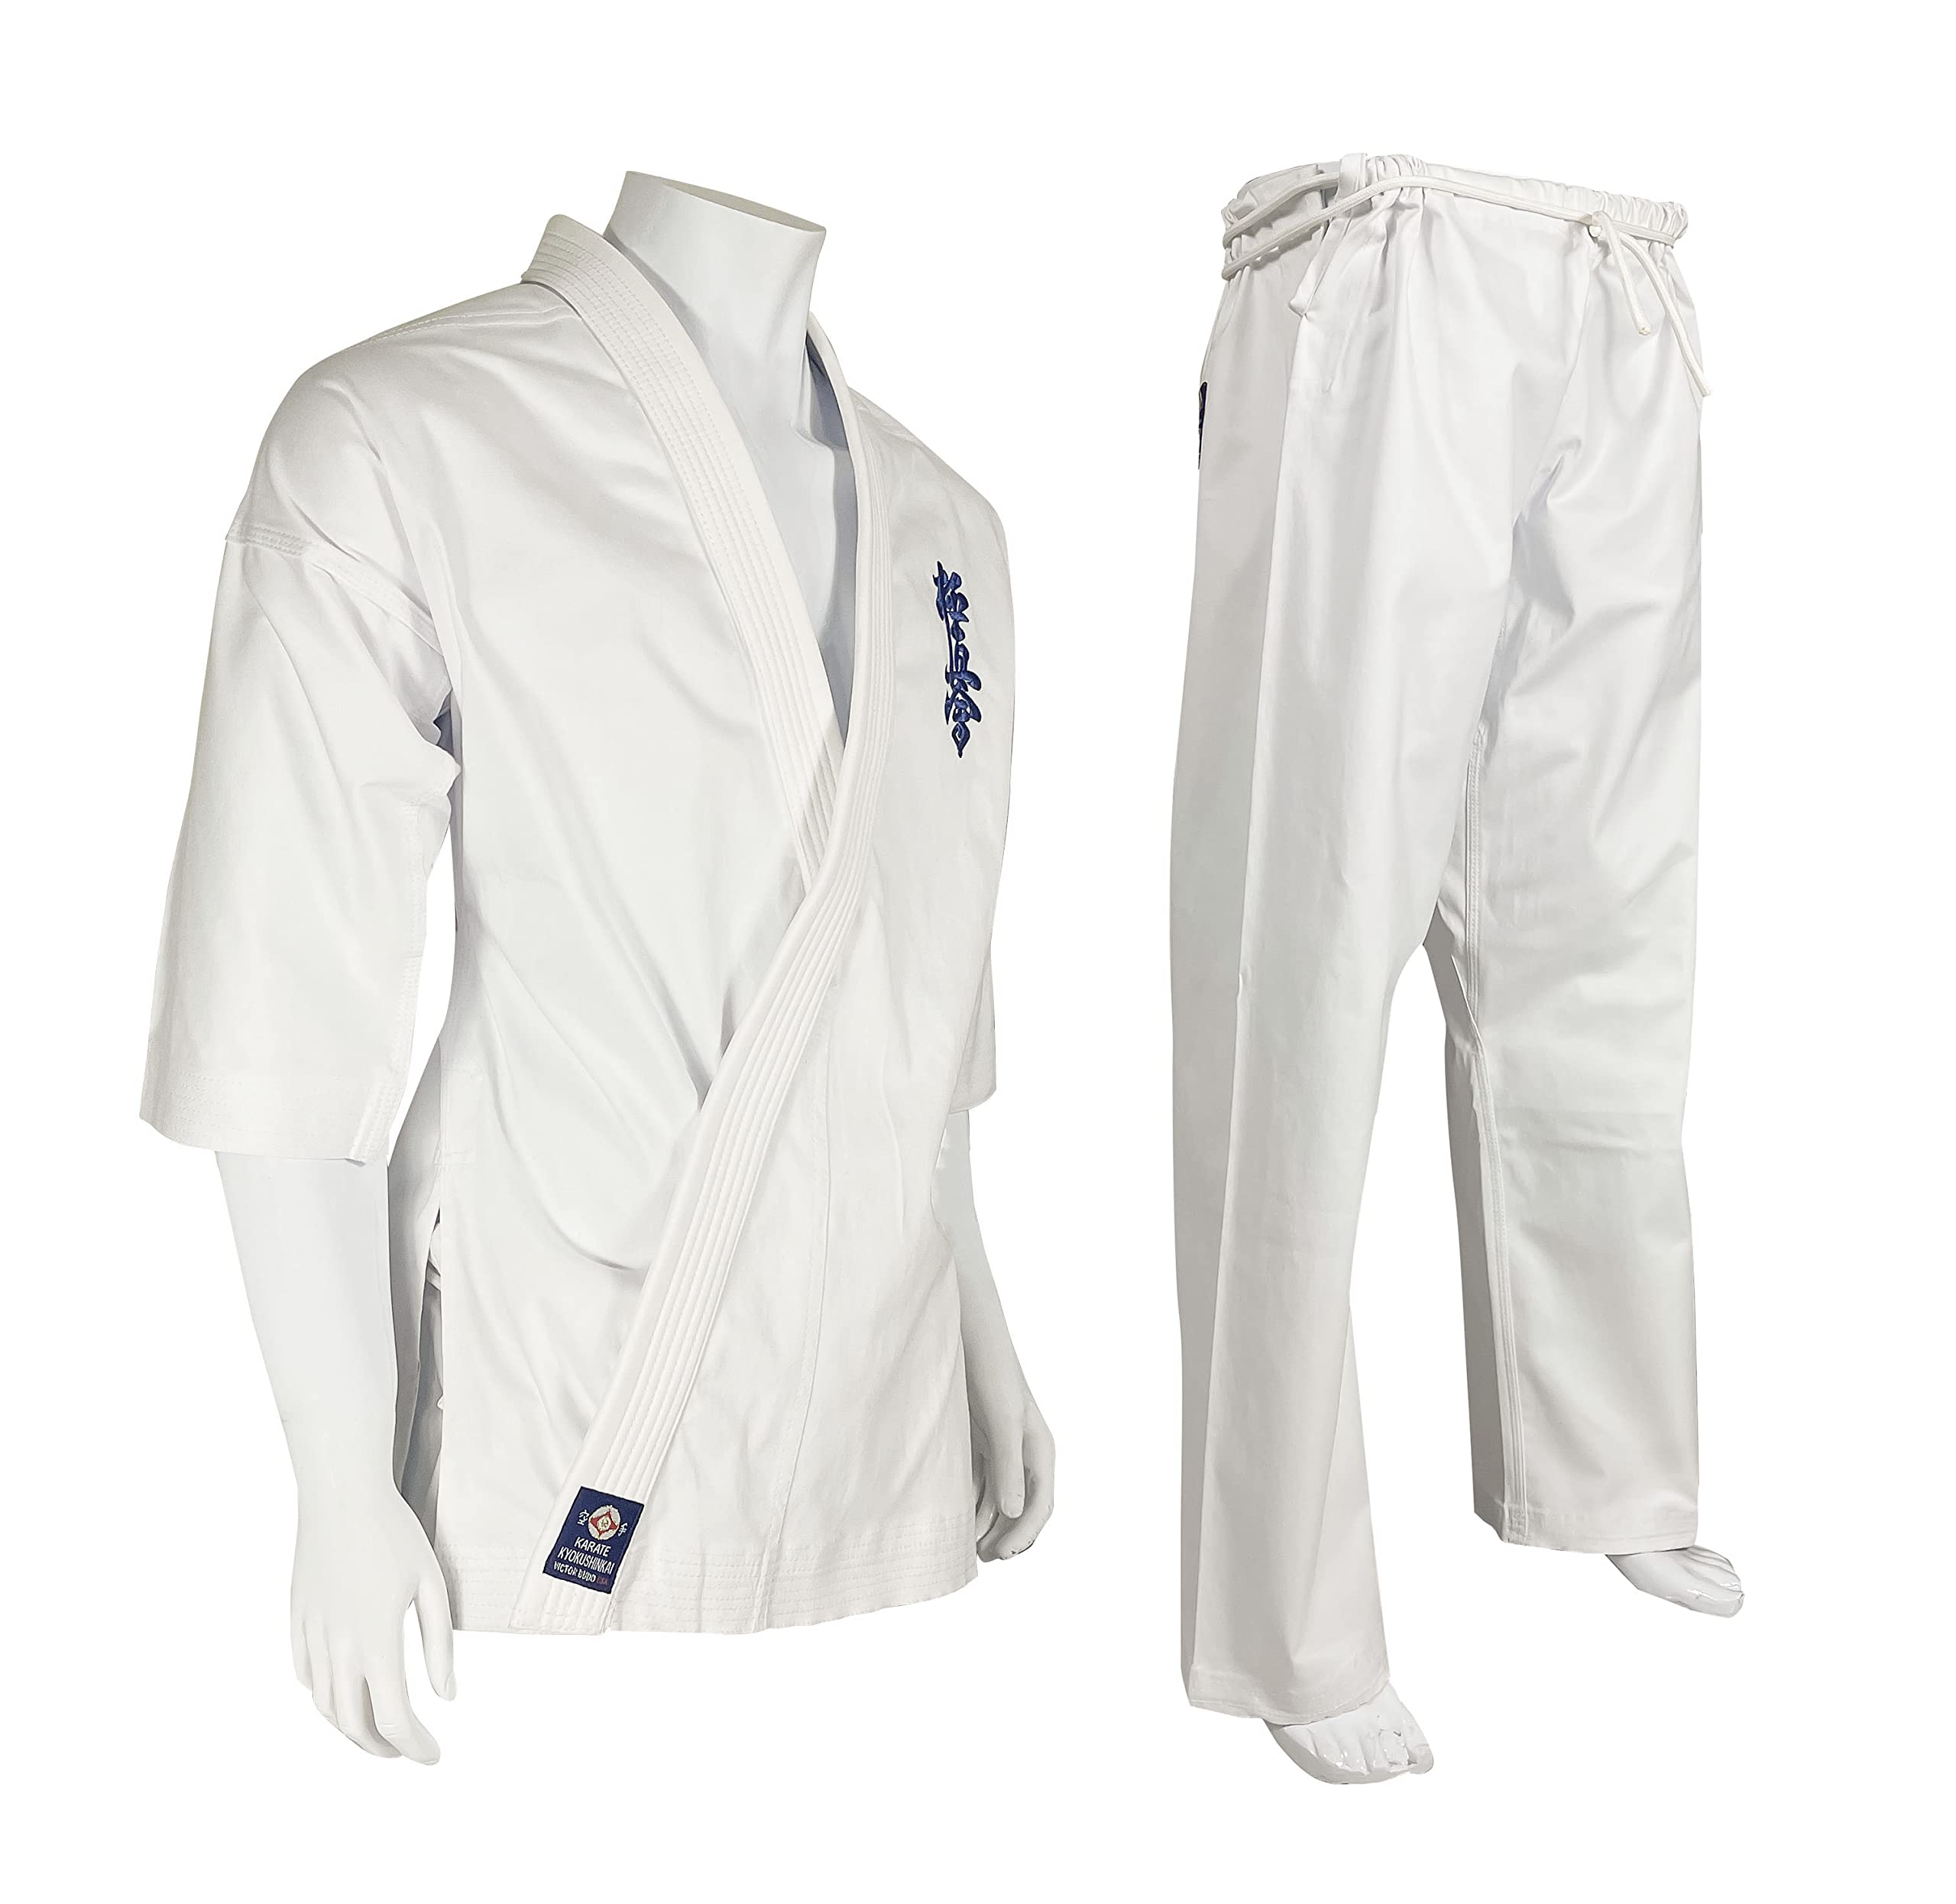 STARPRO Karate Suit Uniform Kit - Good for MMA Martial Arts Karate Gi  Professional Taekwondo Fight Lightweight Kimono WKF | White Cotton Fabric  for Kids Men and Women Come with White Belt |